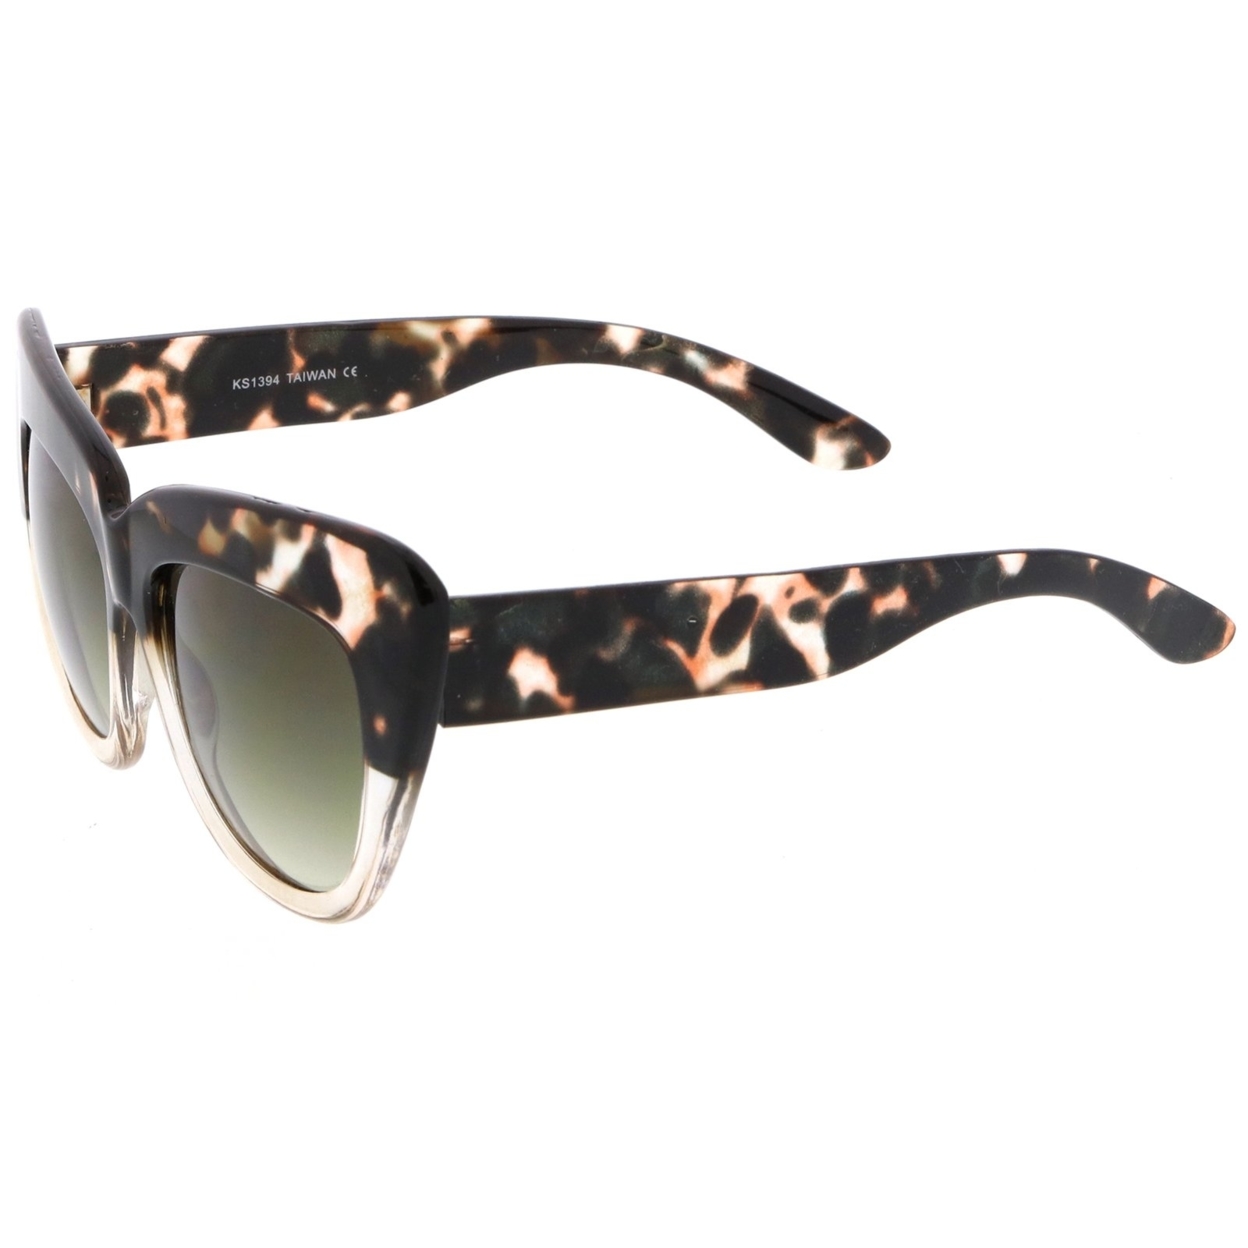 Oversize Printed Frame Wide Temple Square Lens Cat Eye Sunglasses 55mm - Orange-Tortoise-Fade / Amber